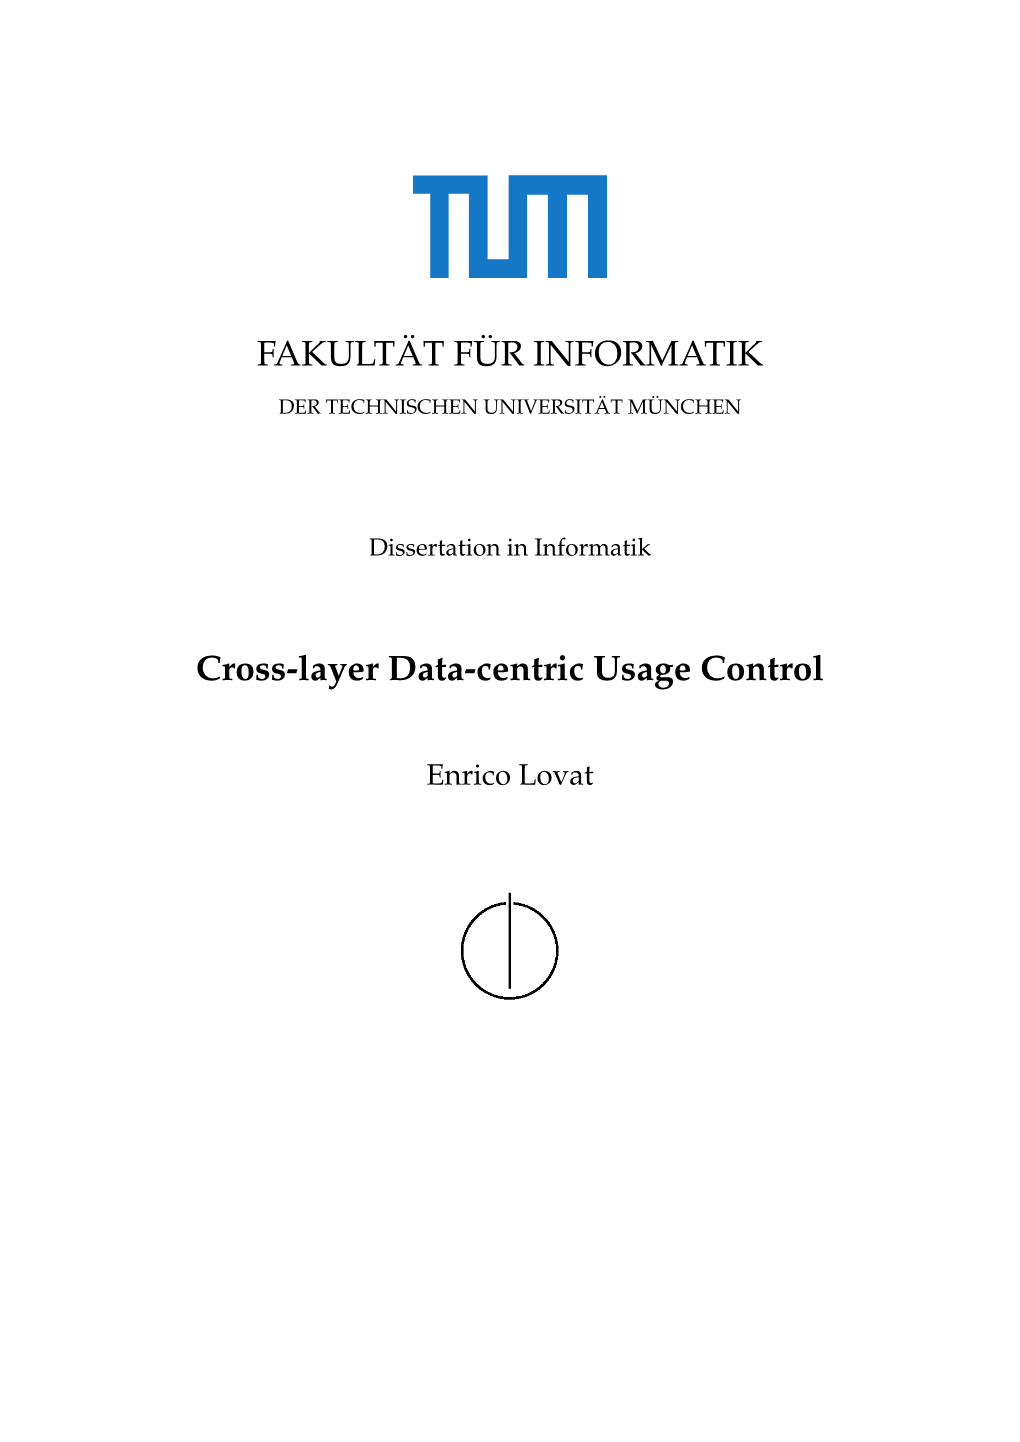 FAKULT¨AT F¨UR INFORMATIK Cross-Layer Data-Centric Usage Control